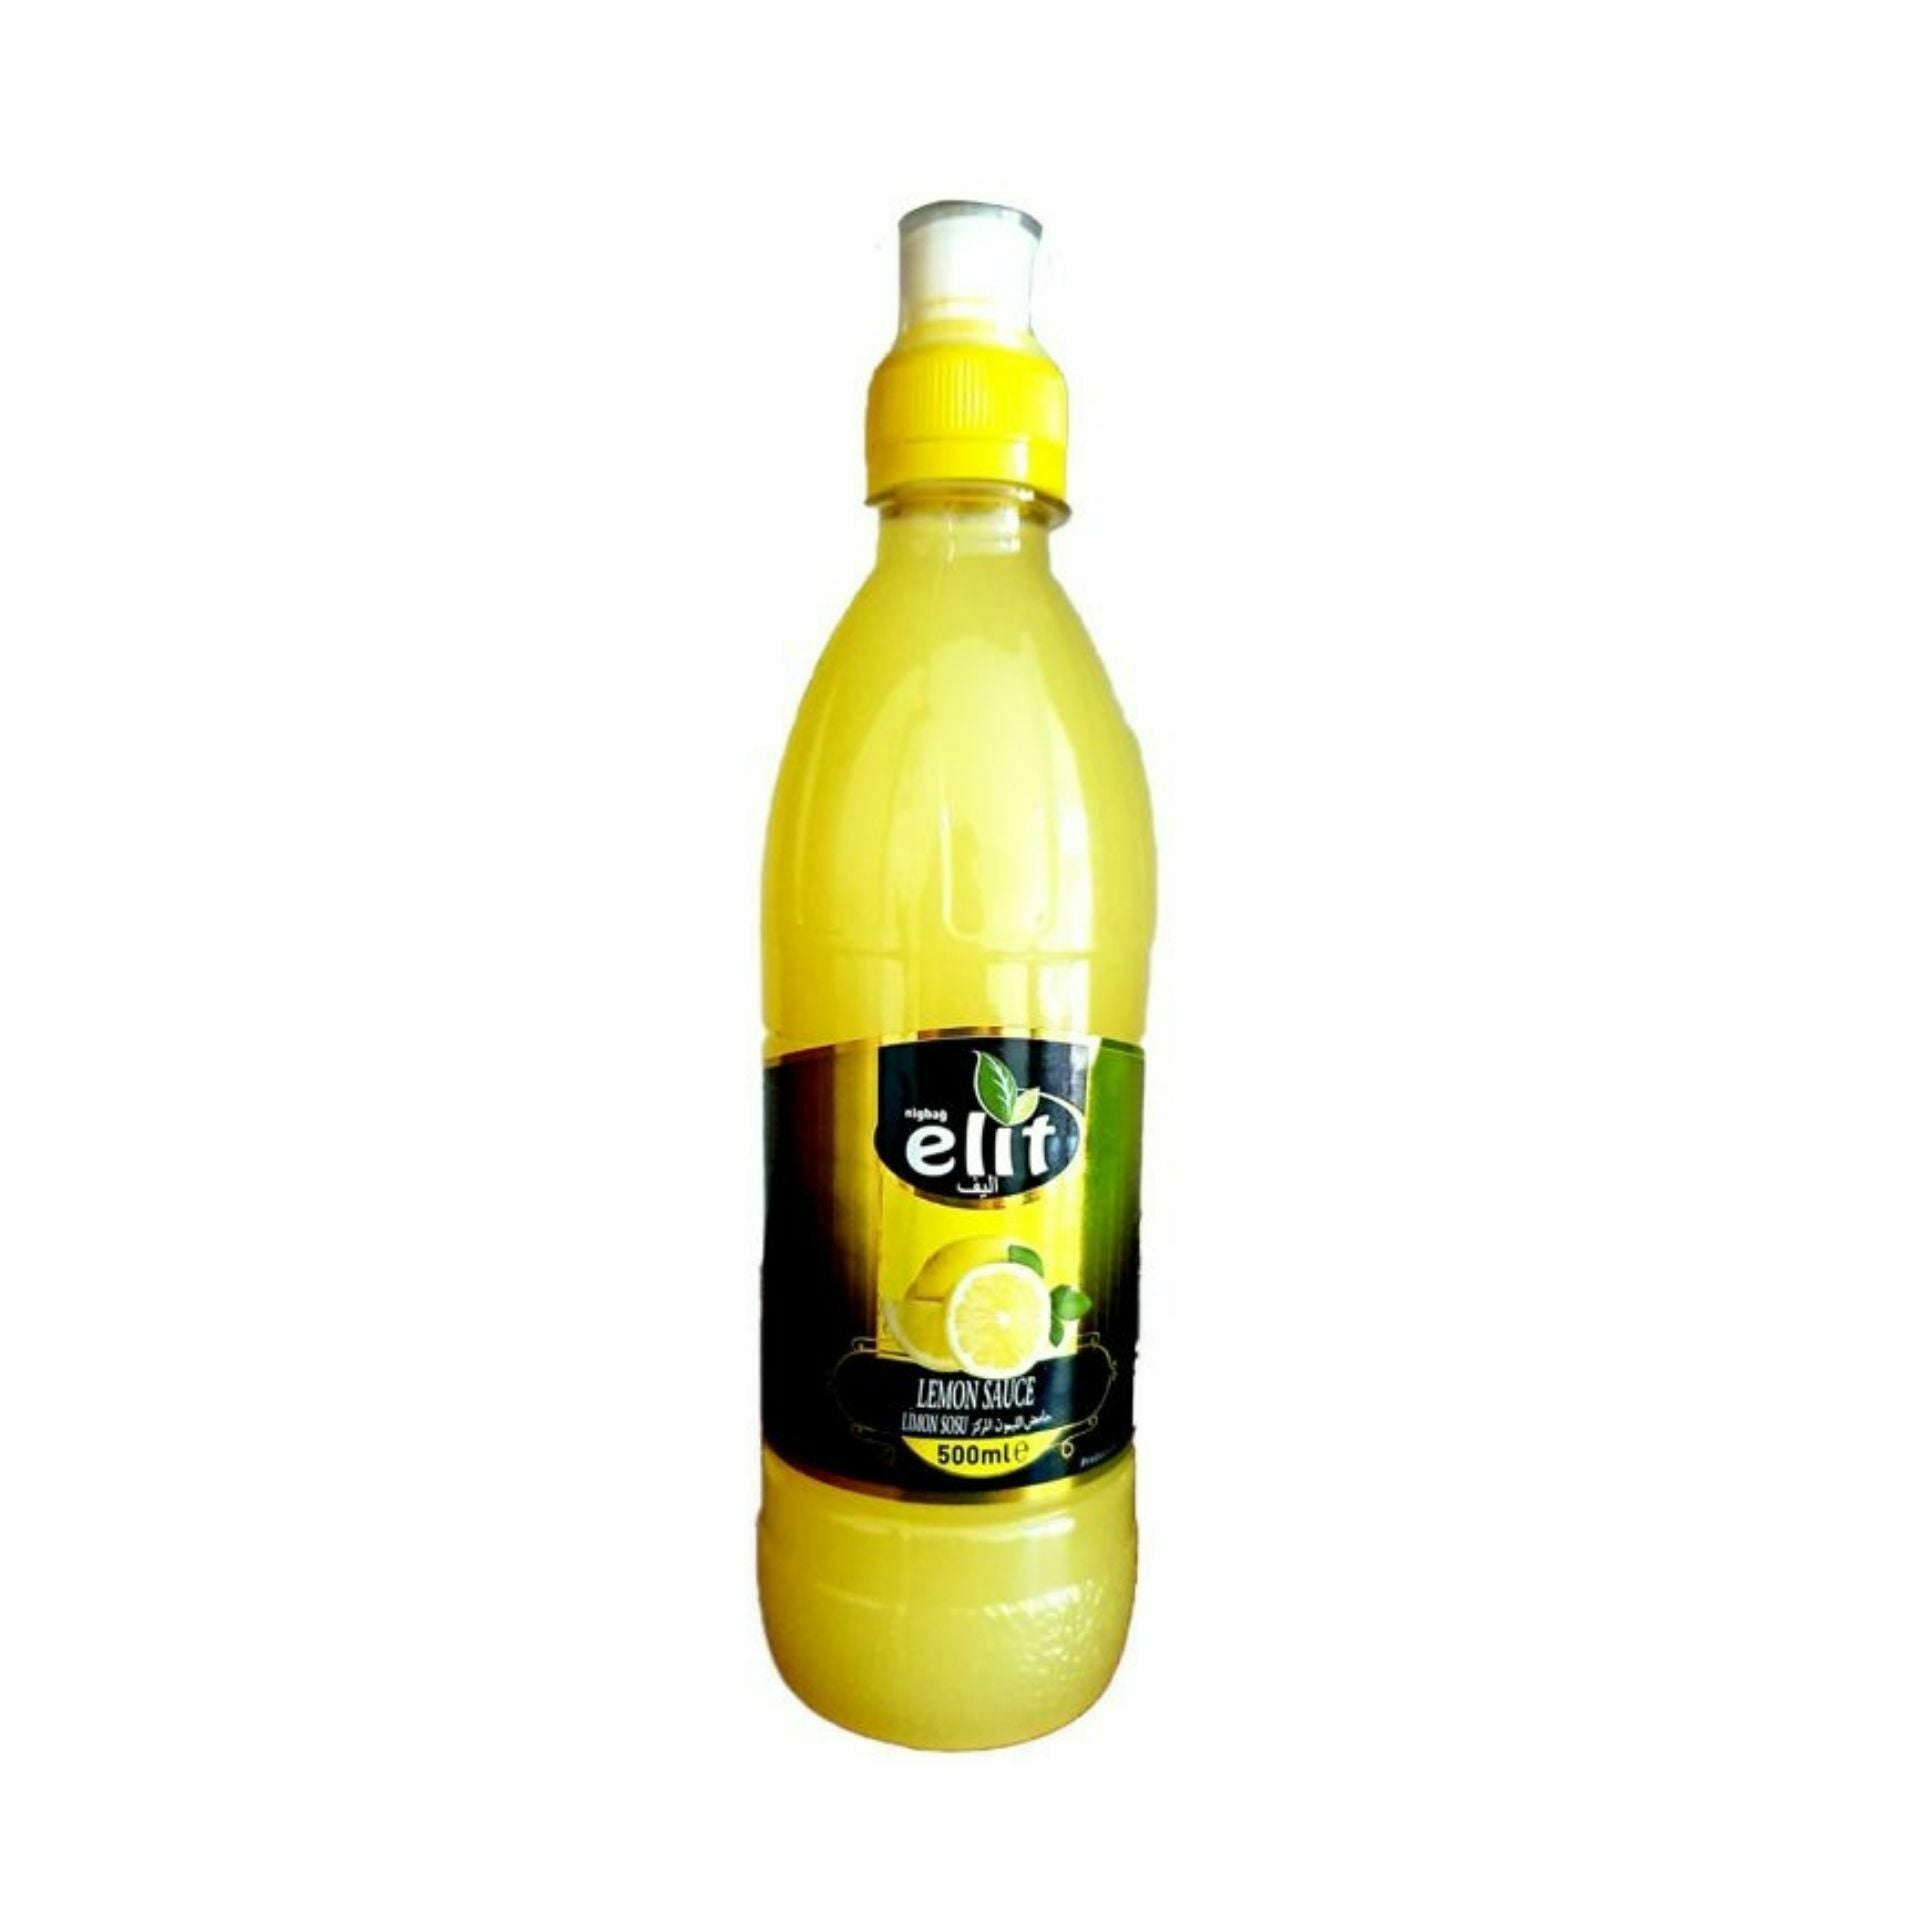 Elit Lemon Sauce (500ml) - Aytac Foods